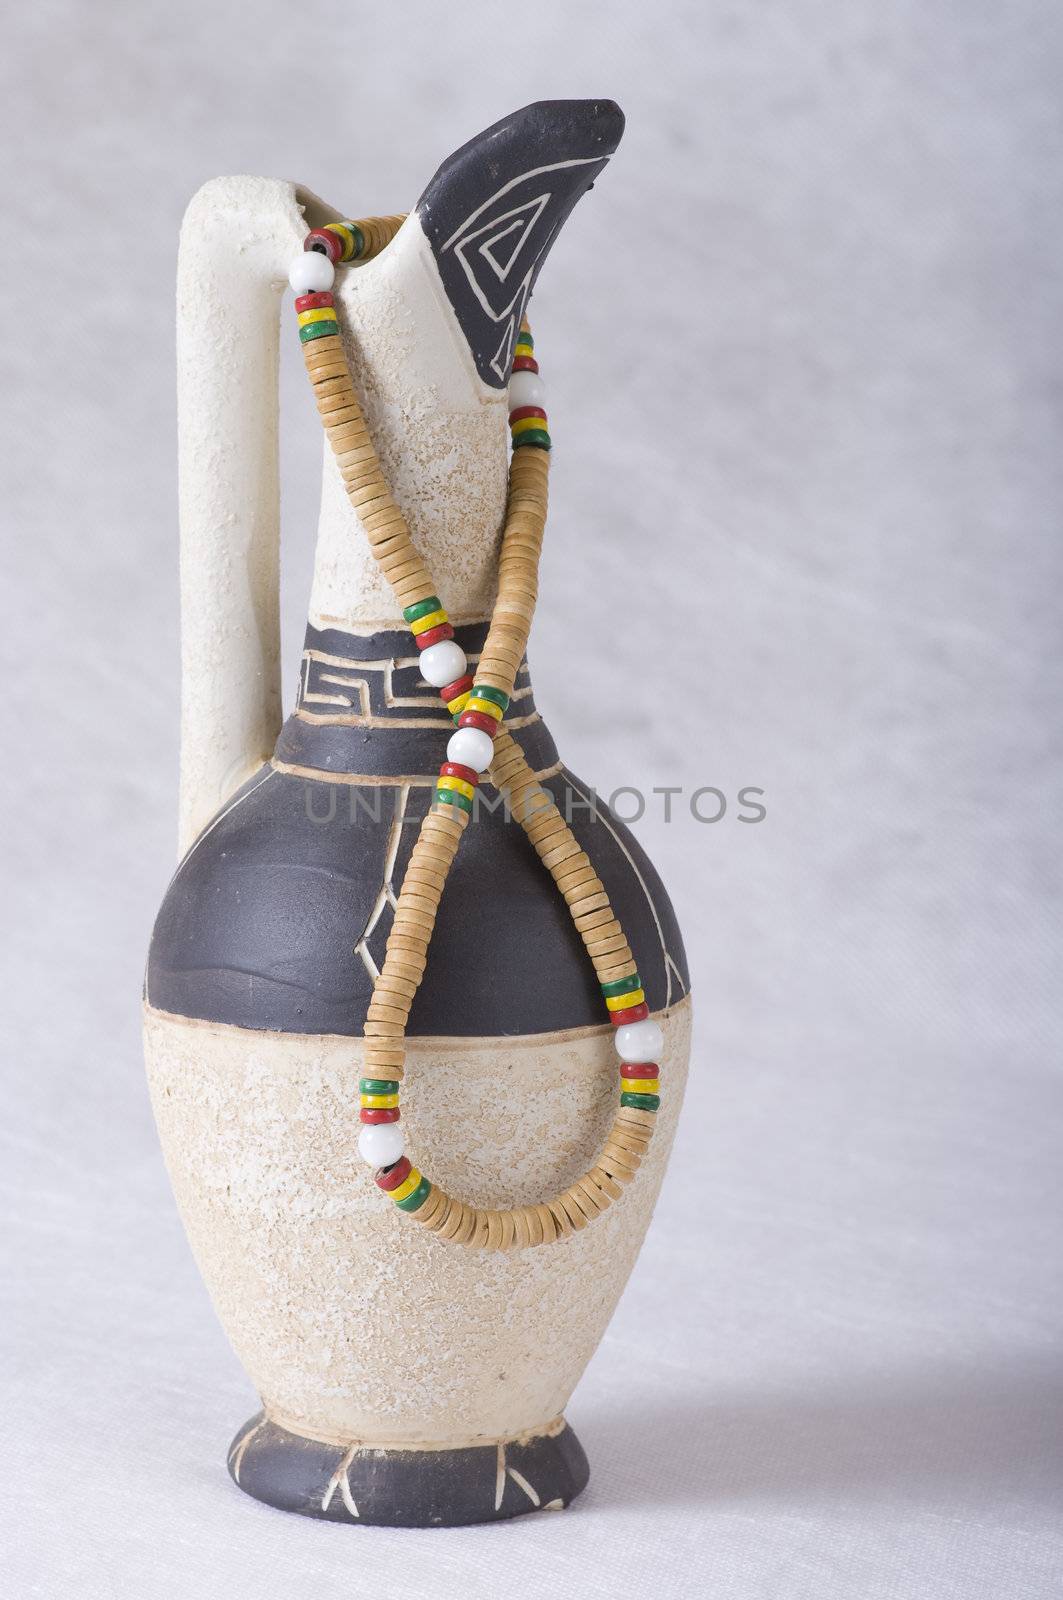 Clay jug and beads by Shpinat